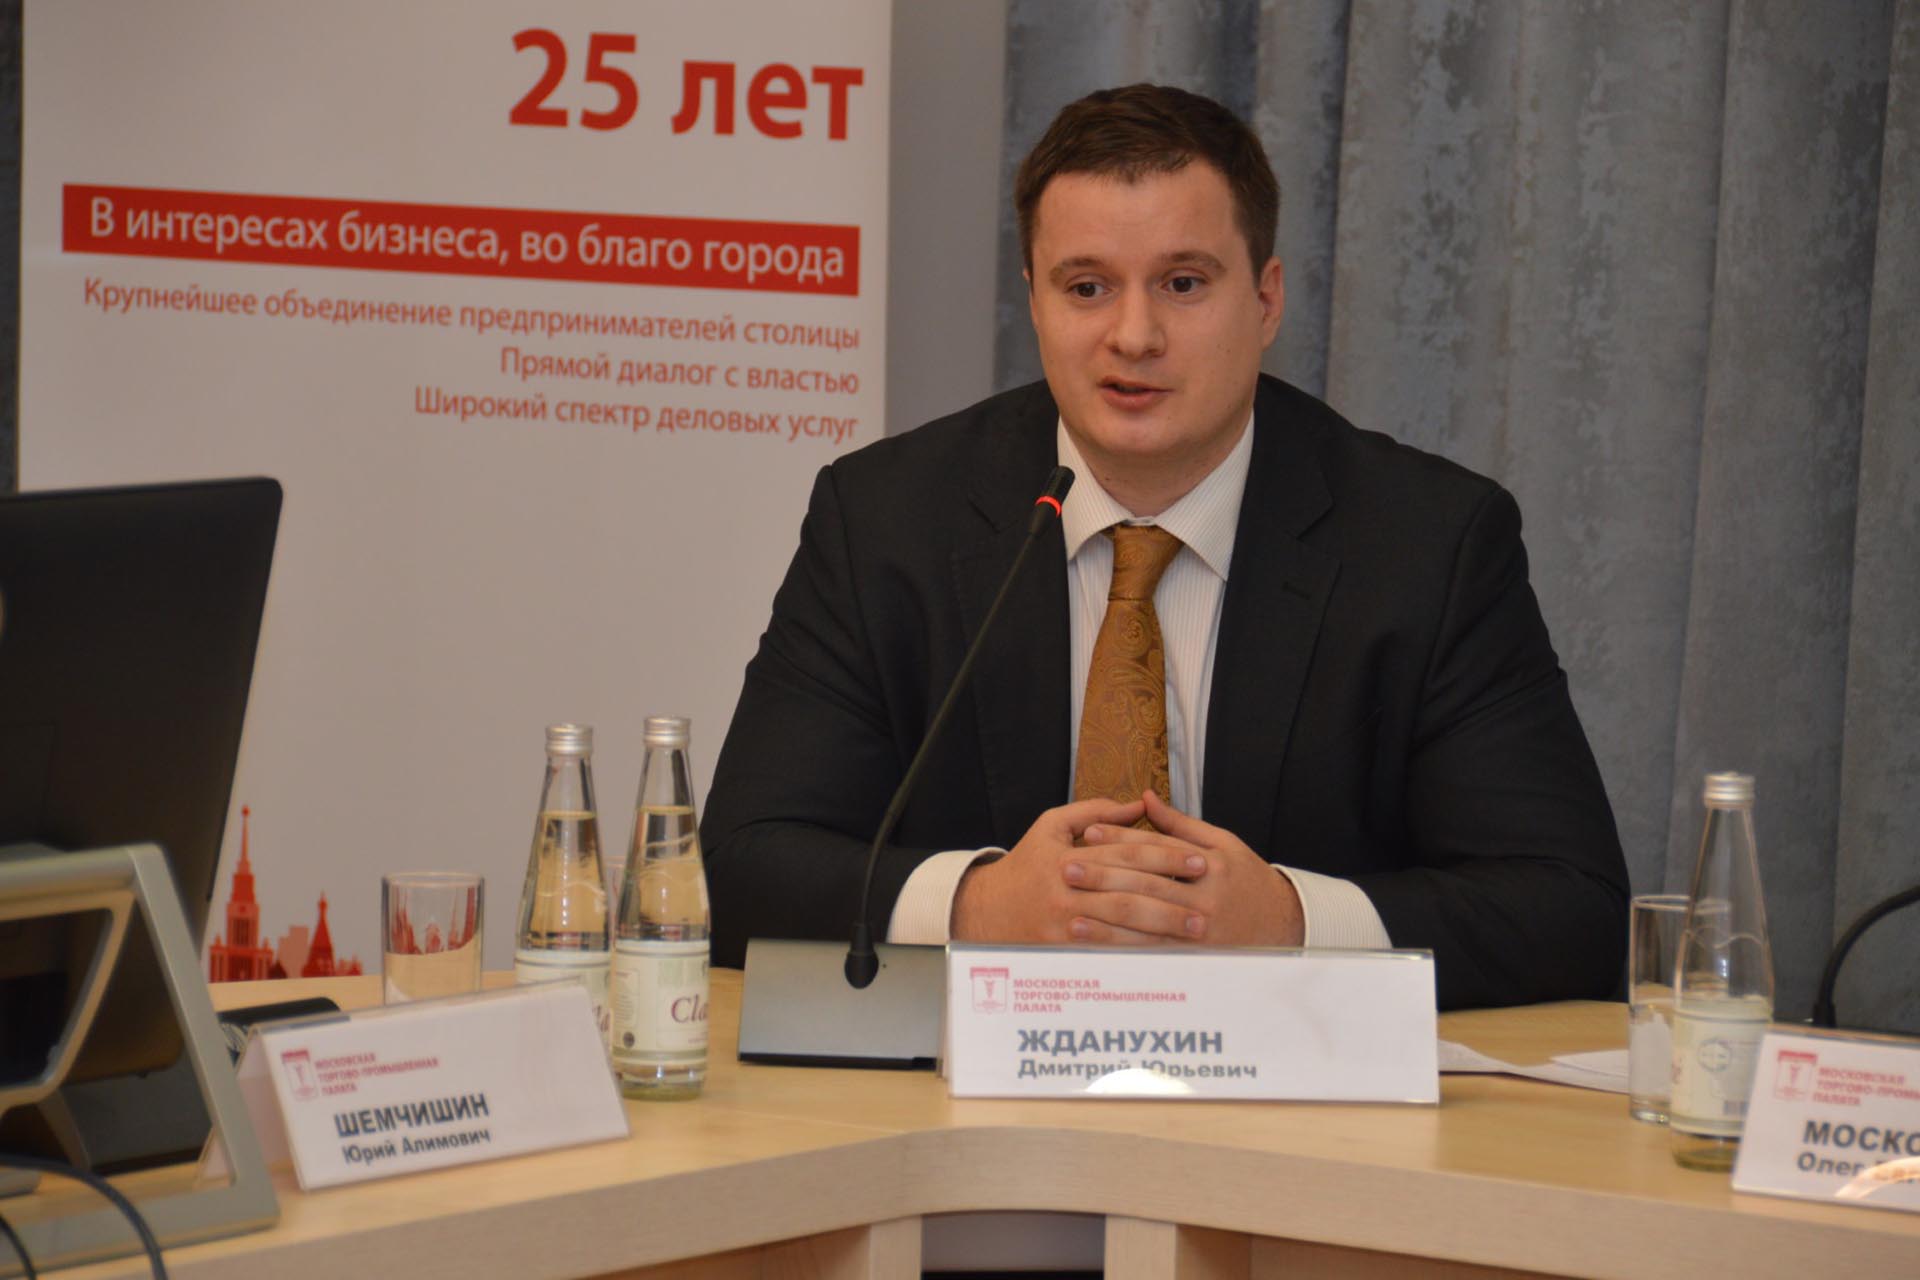 Дмитрий Жданухин - кандидат юридических наук